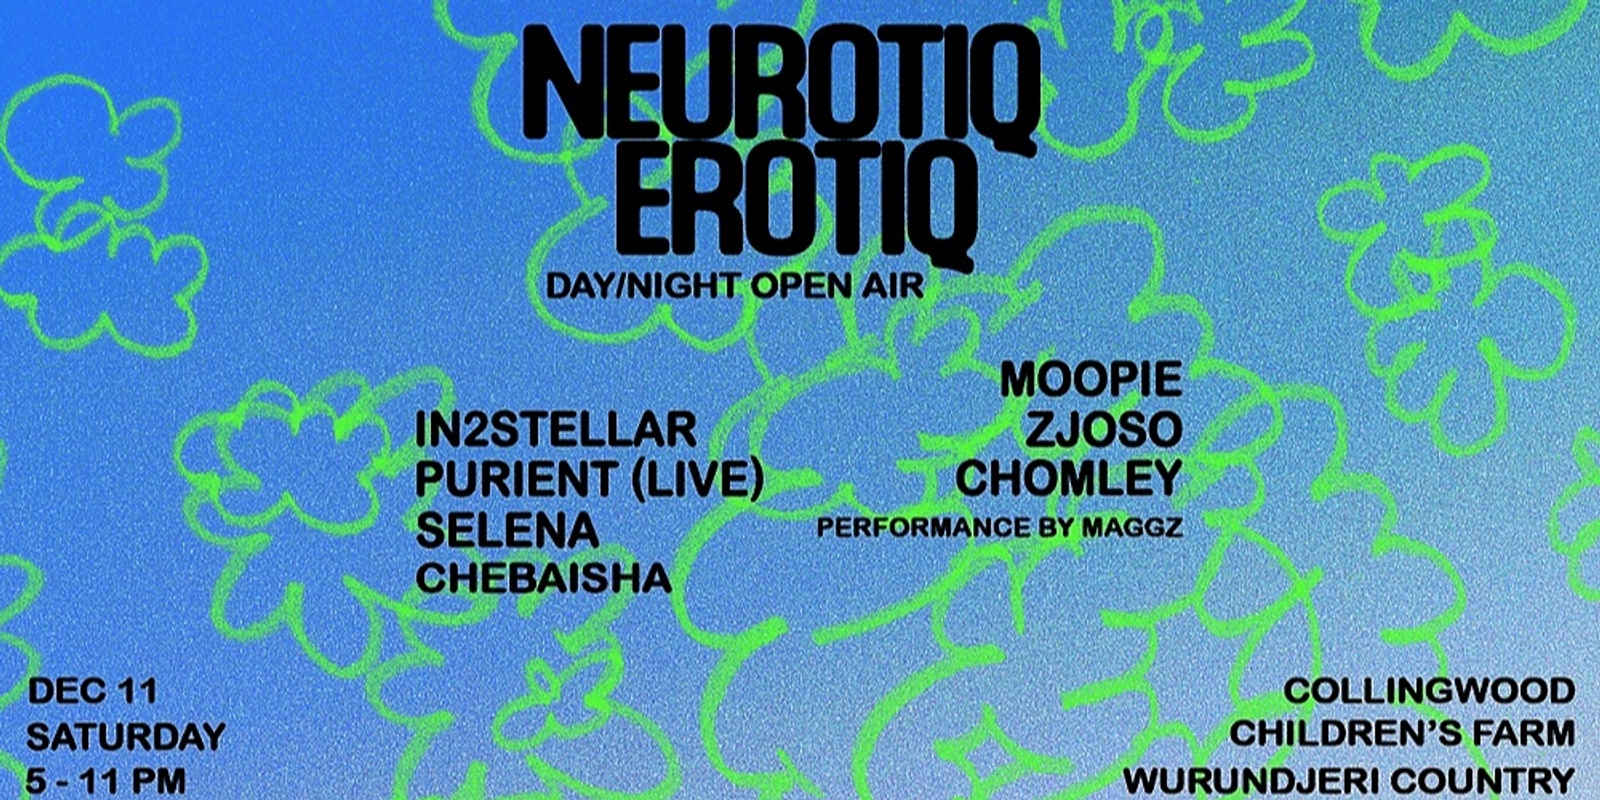 Banner image for Neurotiq Erotiq ☼ Day/Night Open Air